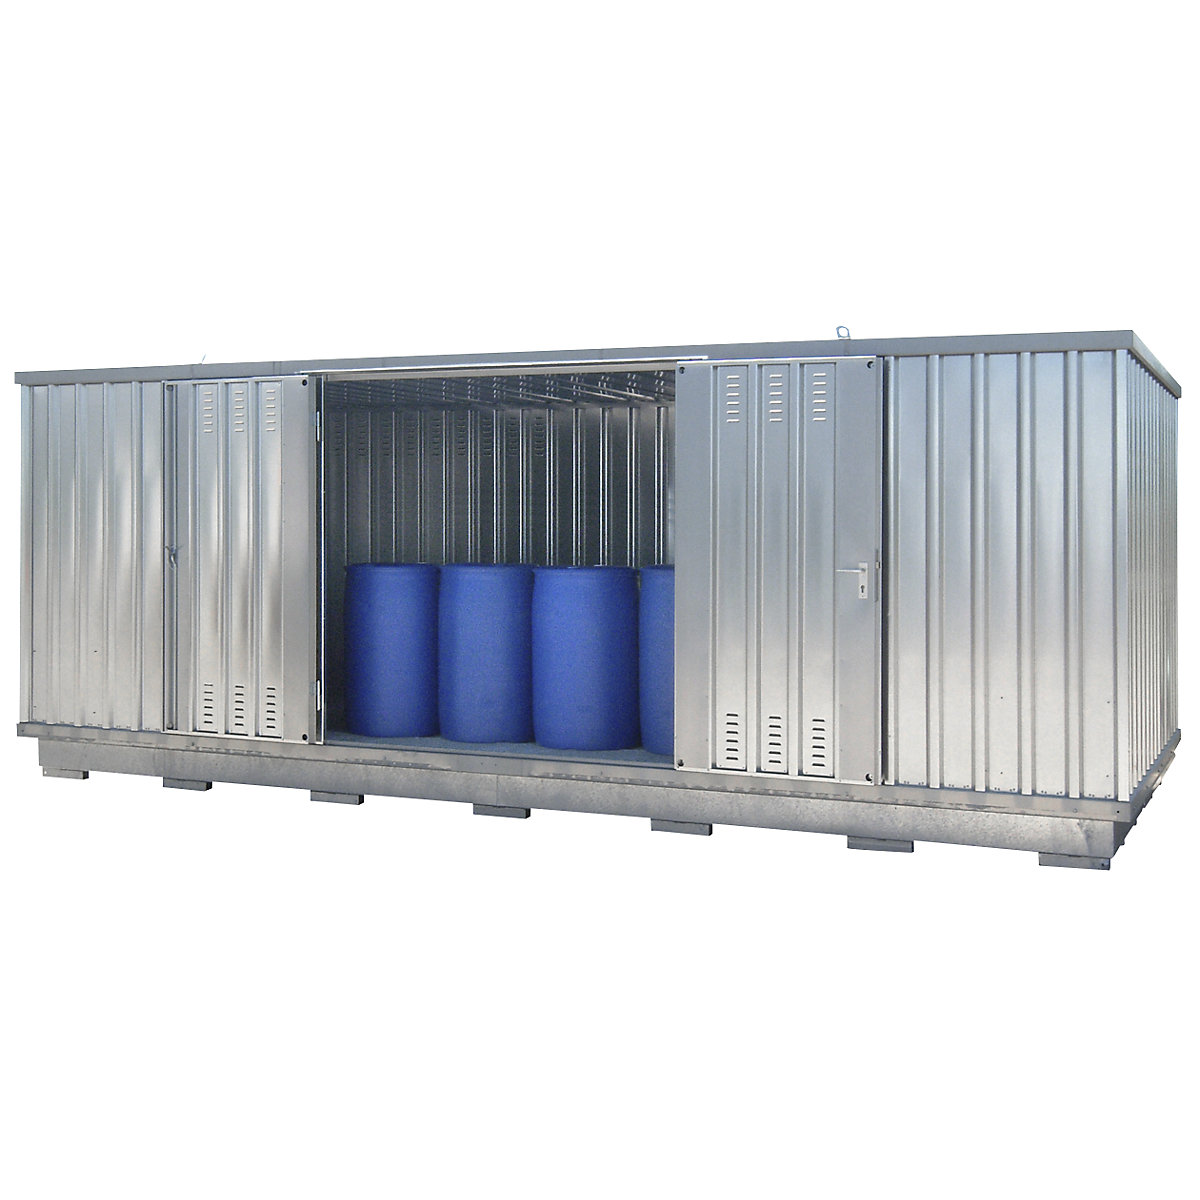 Hazardous goods storage container for water hazardous media, external HxWxD 2385 x 6075 x 2875 mm, zinc plated